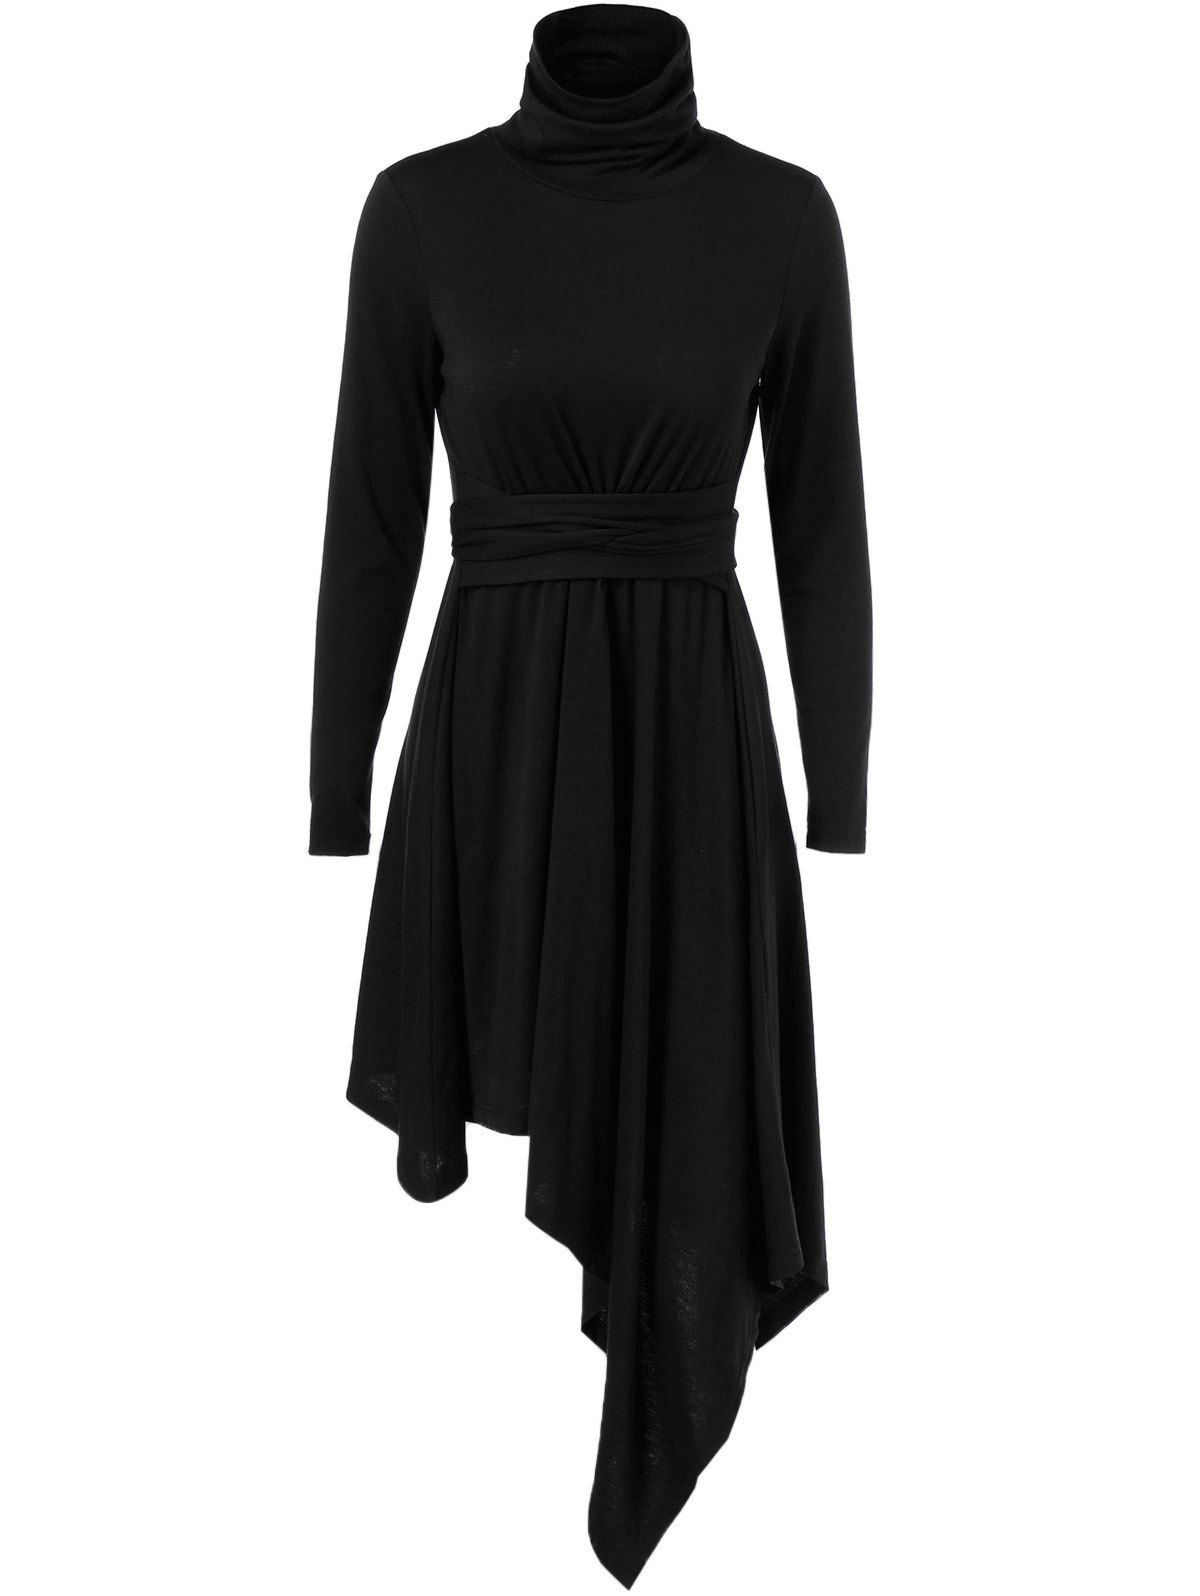 2018 Asymmetrical High Neck Long Sleeve Dress In Black Xl | Rosegal.com